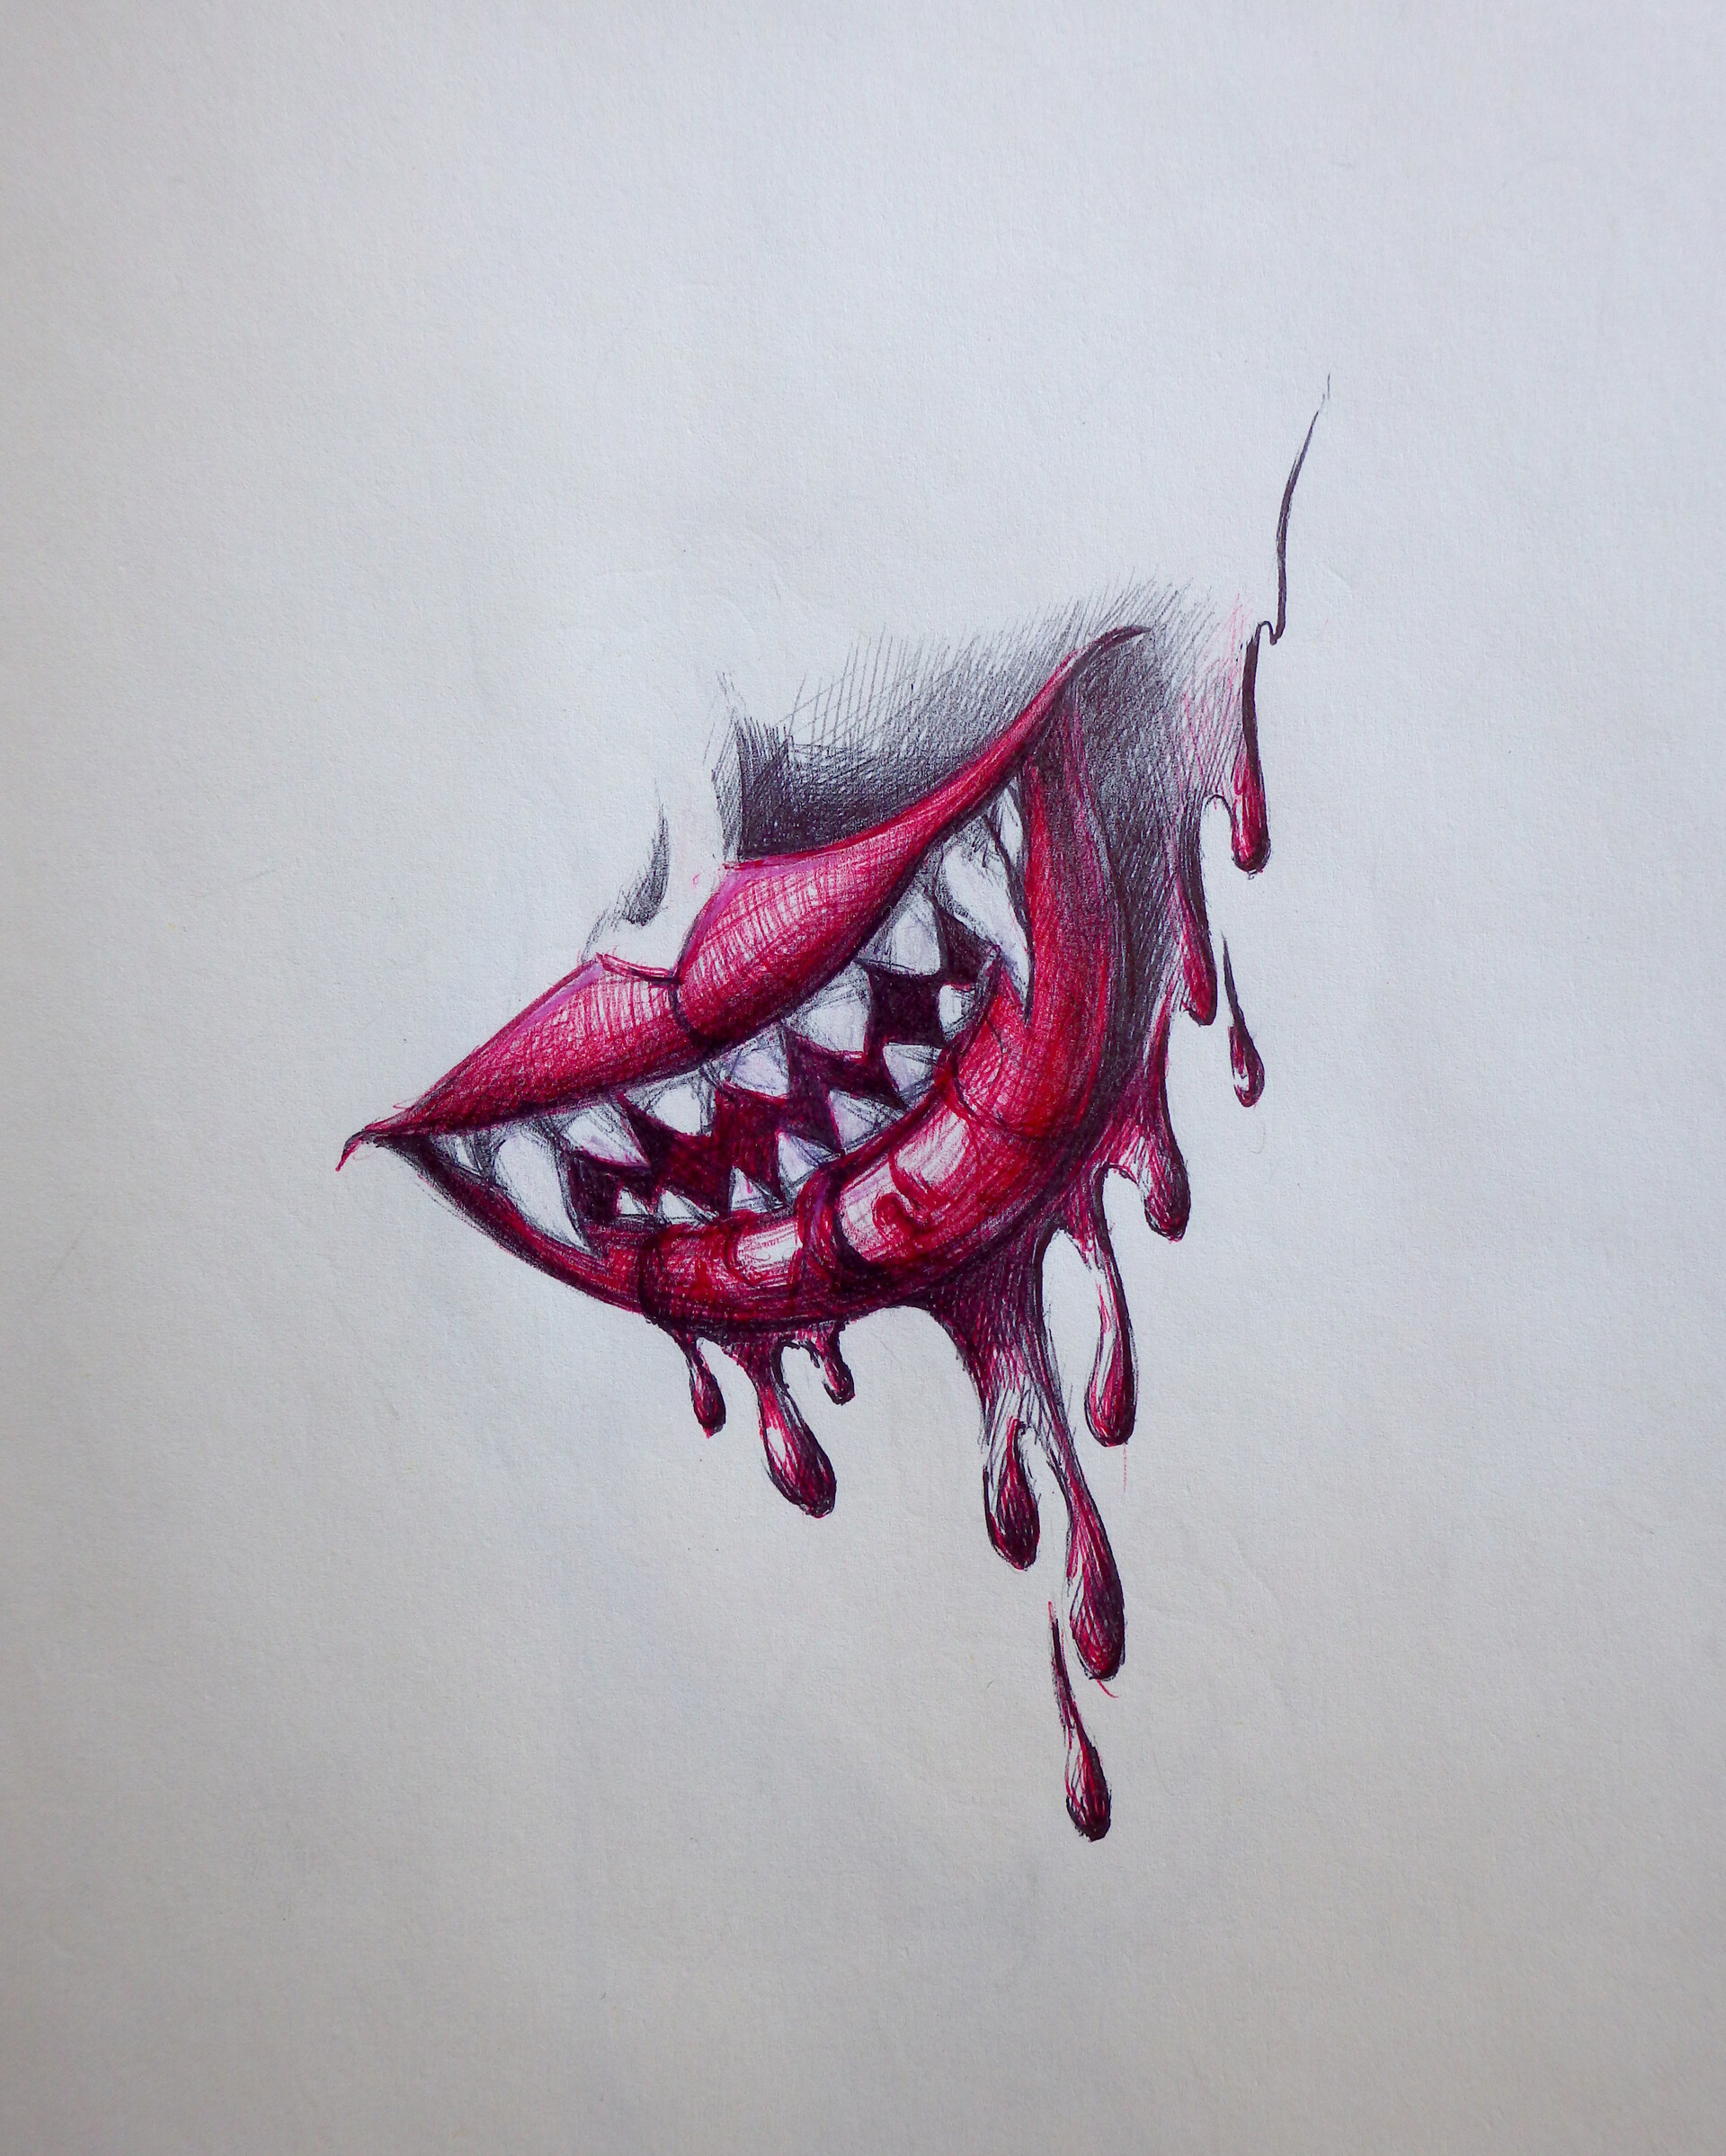 Smile again  Demon drawings Jester tattoo Dark art tattoo